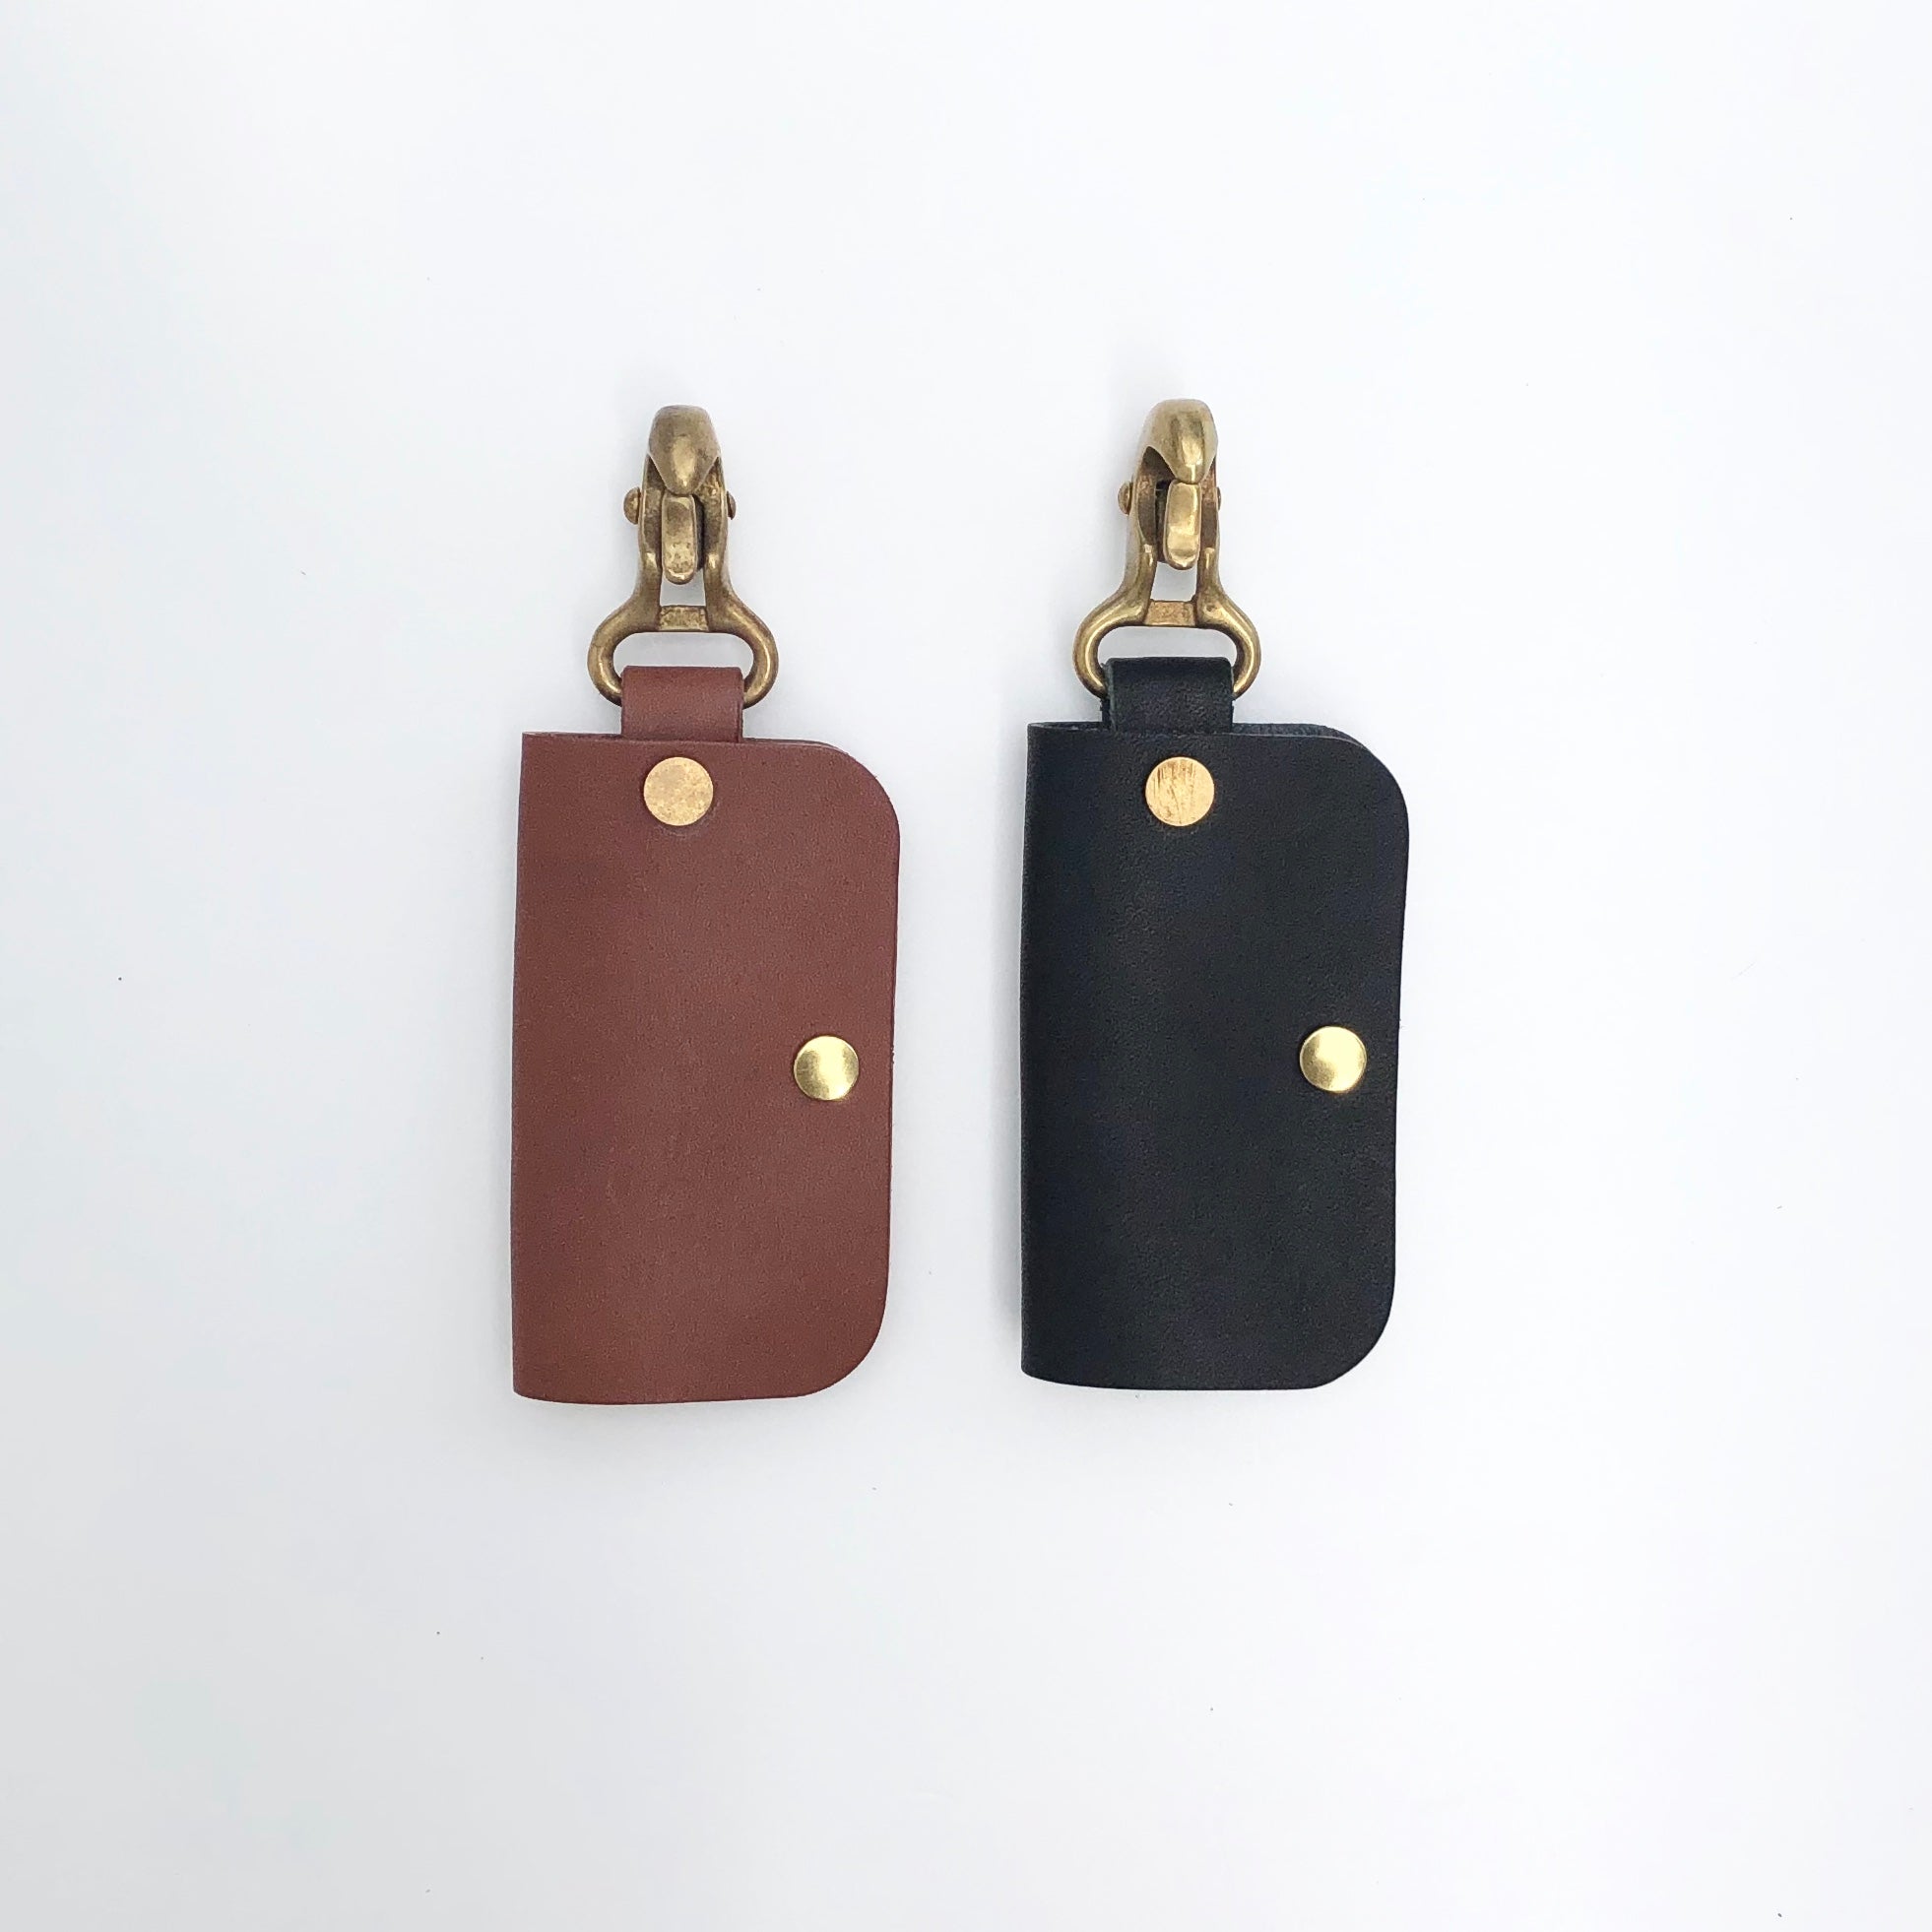 armadillo leather works 【arm-303】 Key case shoehorn